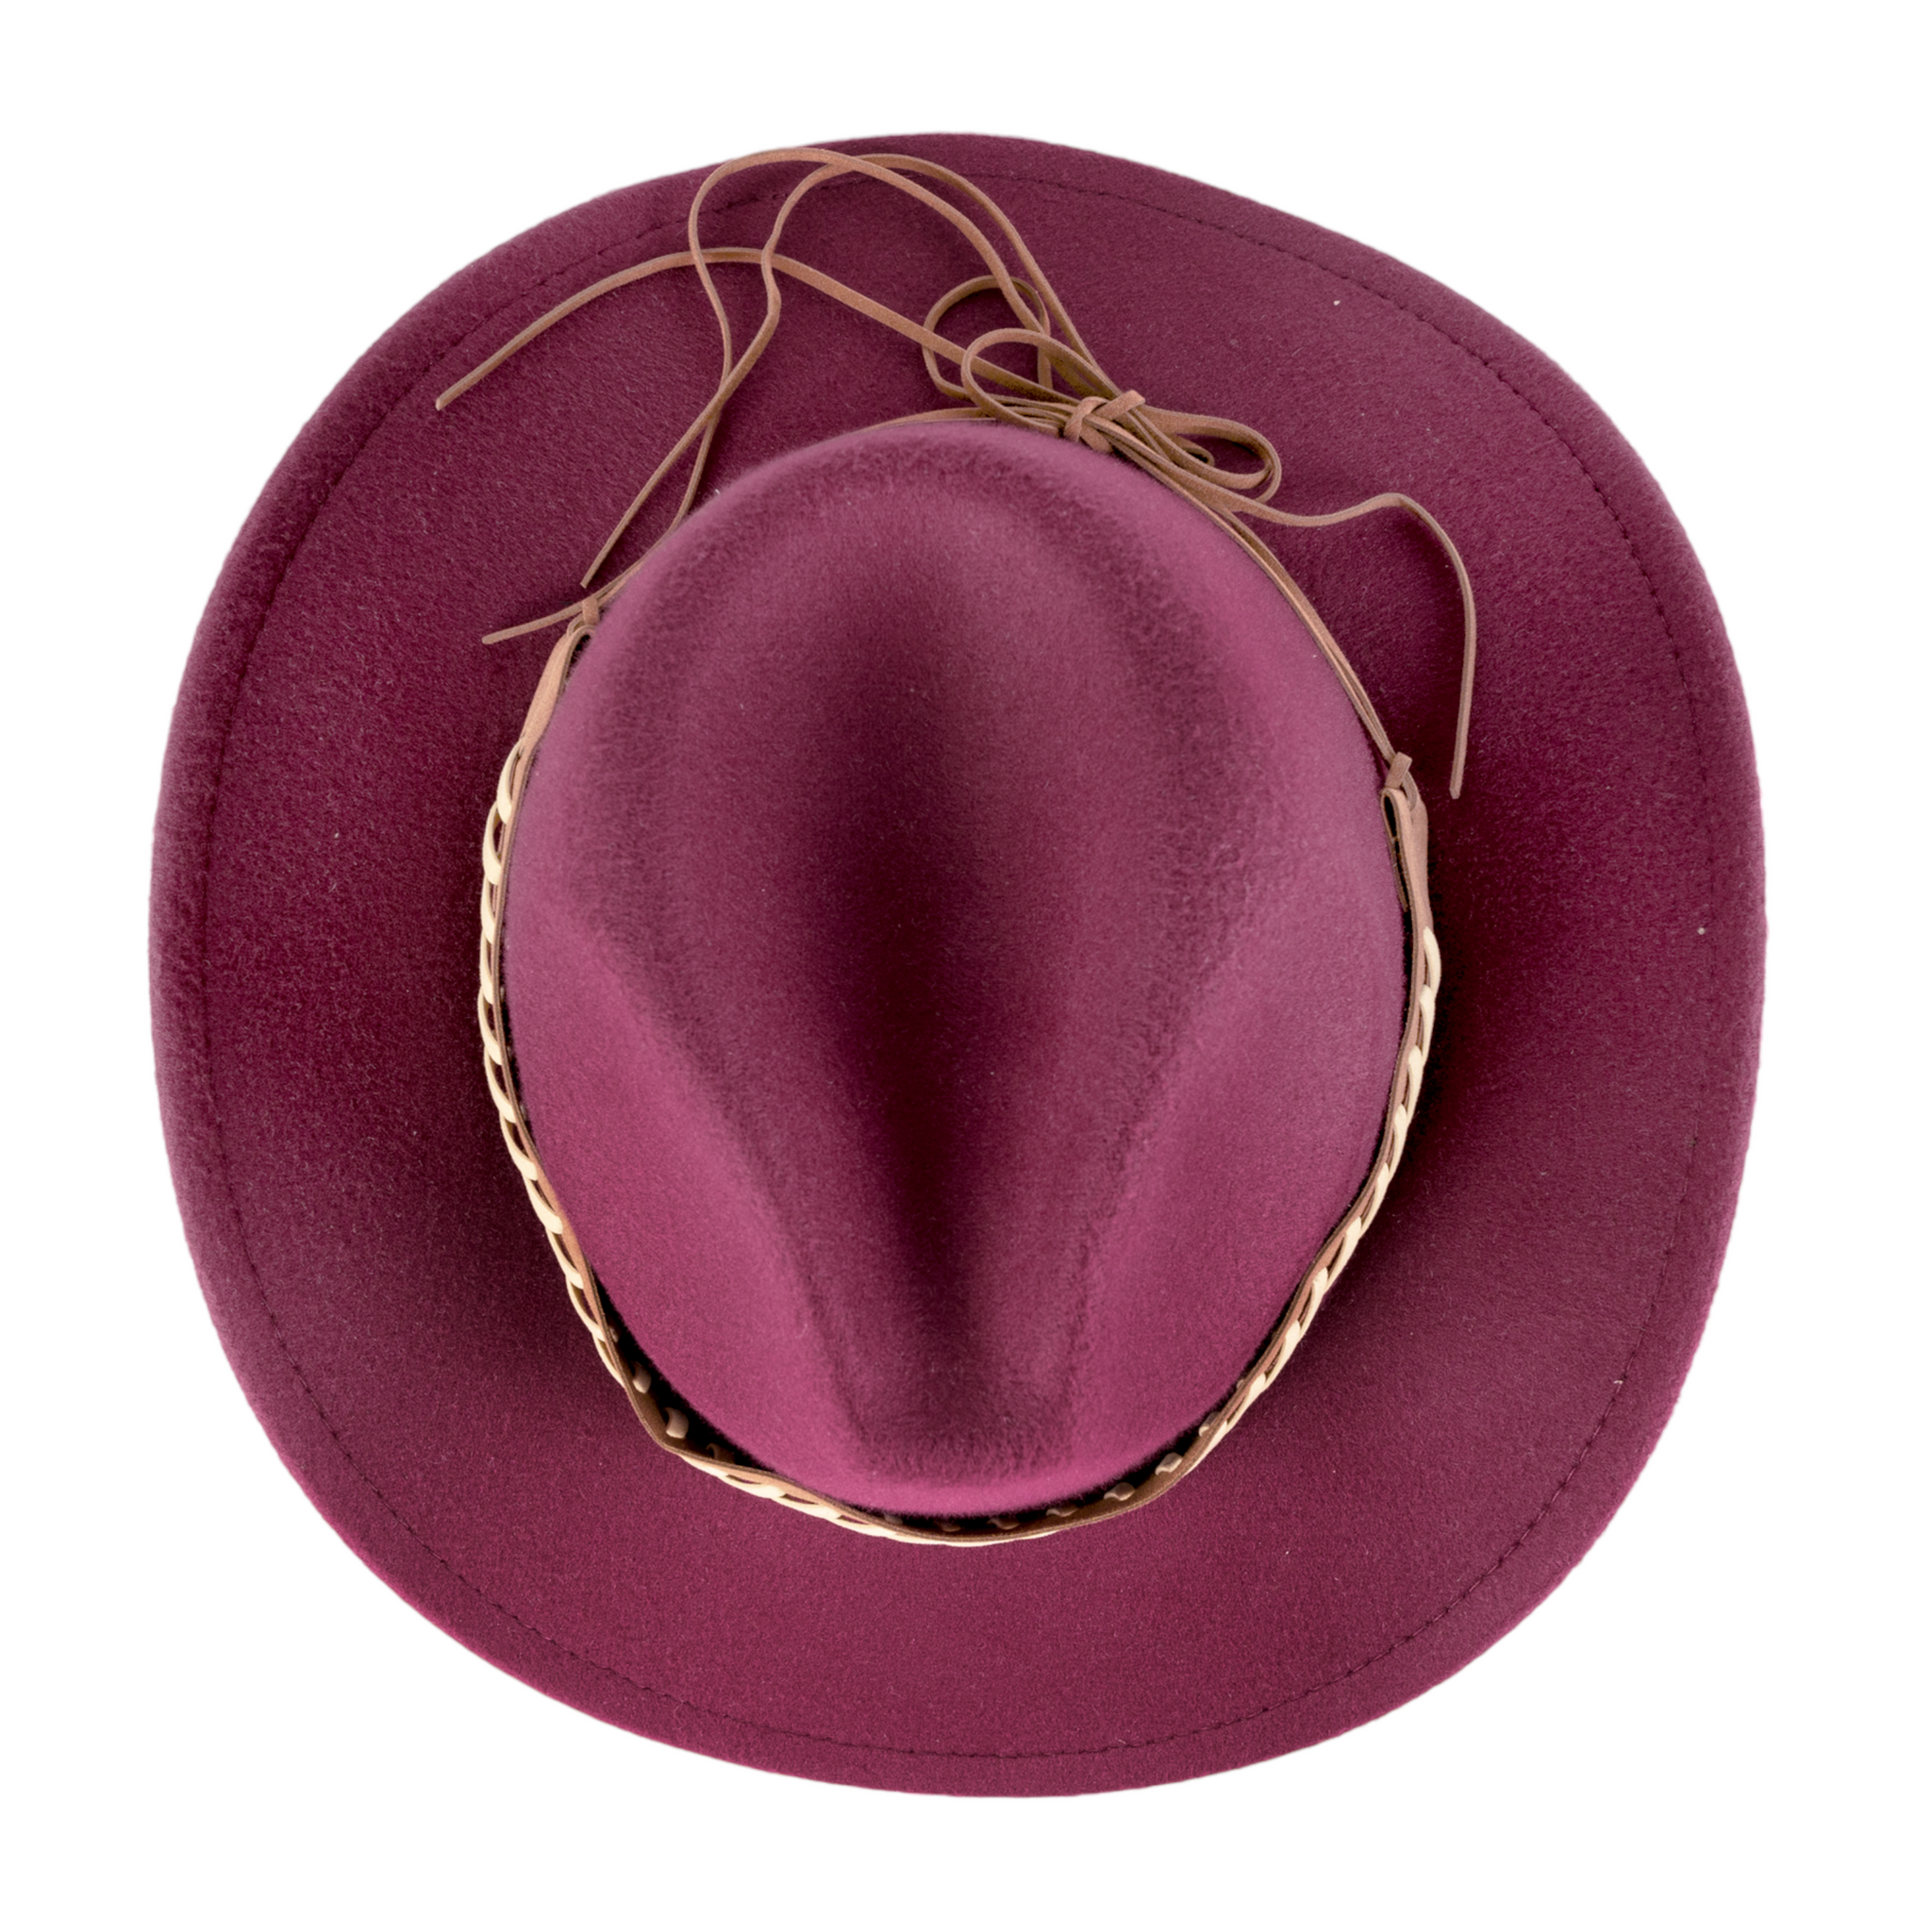 Chokore Cowboy Hat with Braided PU Belt (Burgundy)